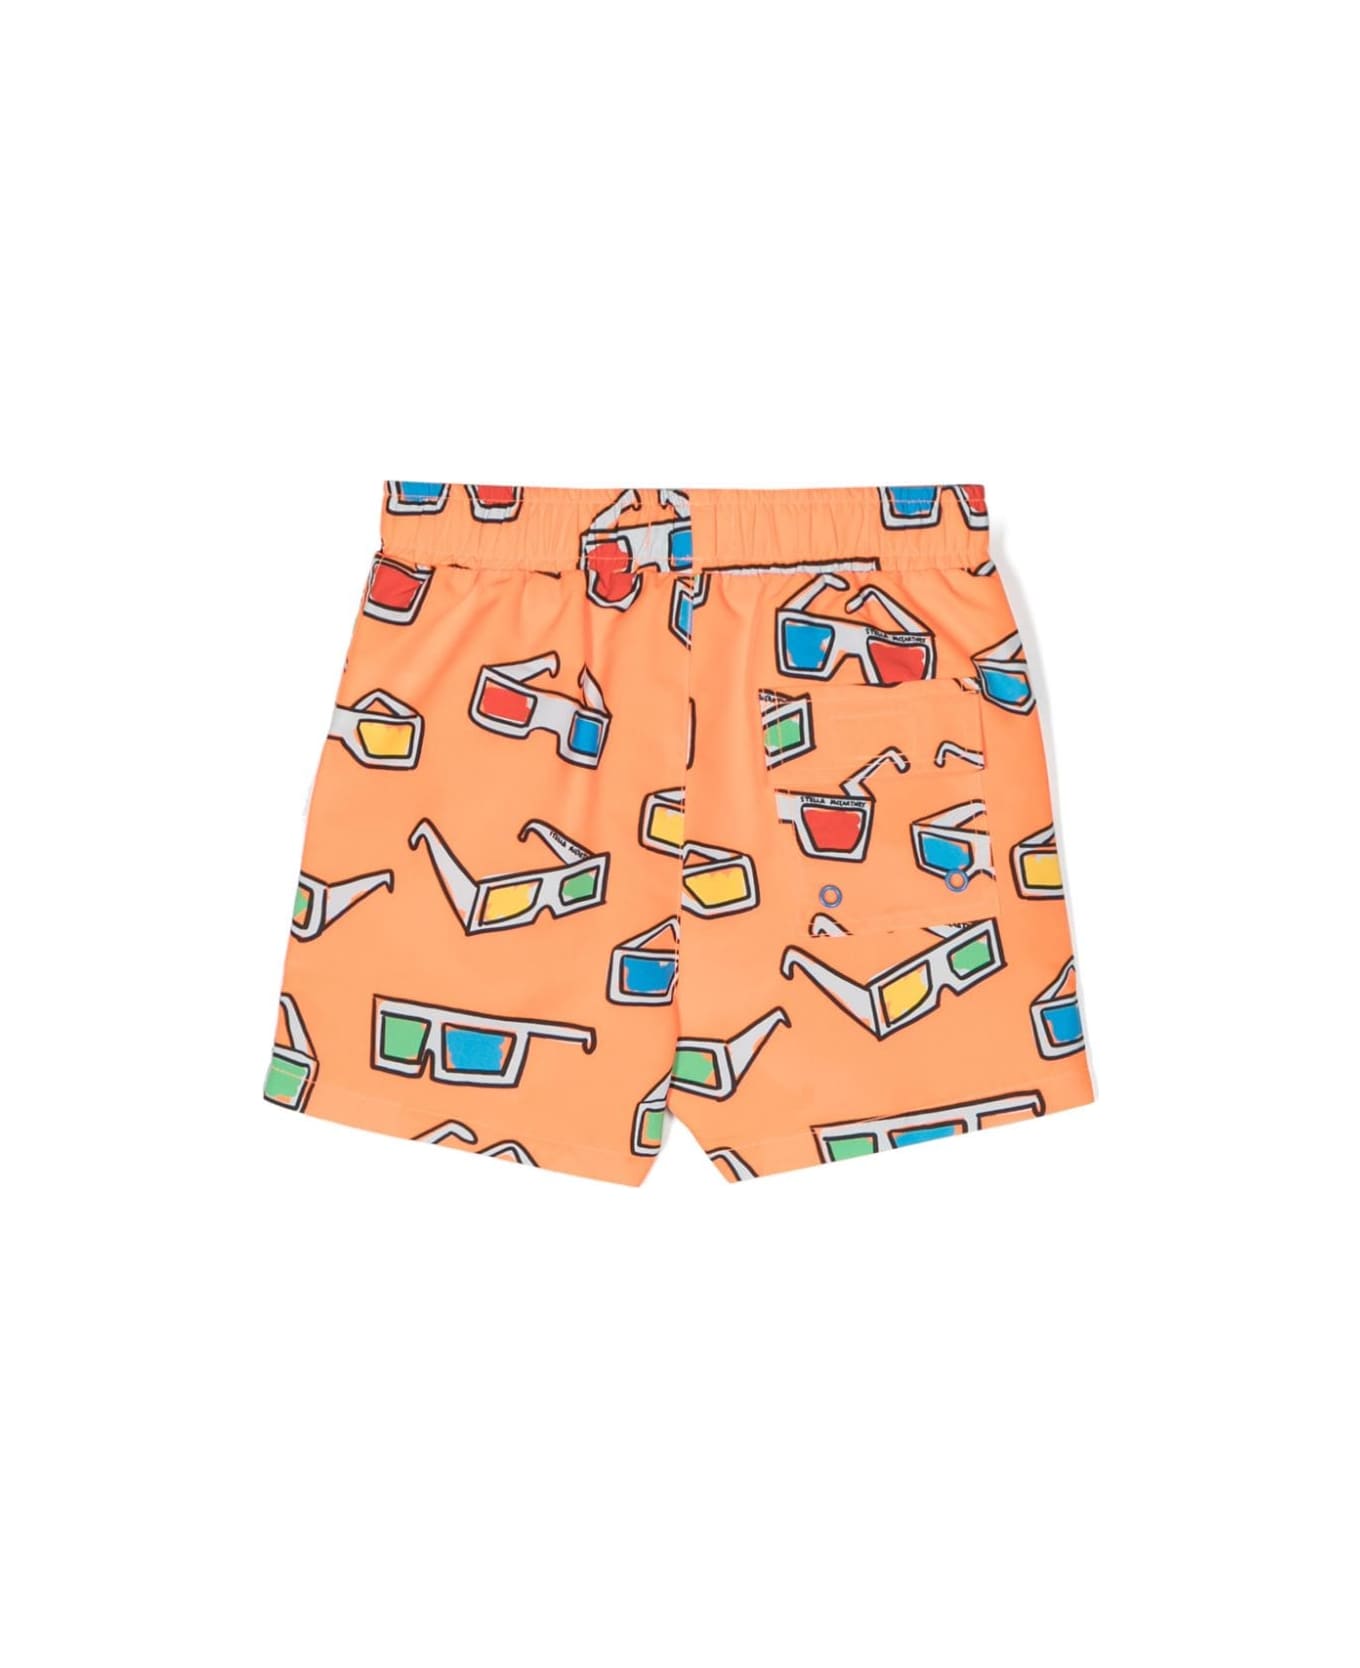 Stella McCartney Kids Swimsuit With Graphic Print - Orange